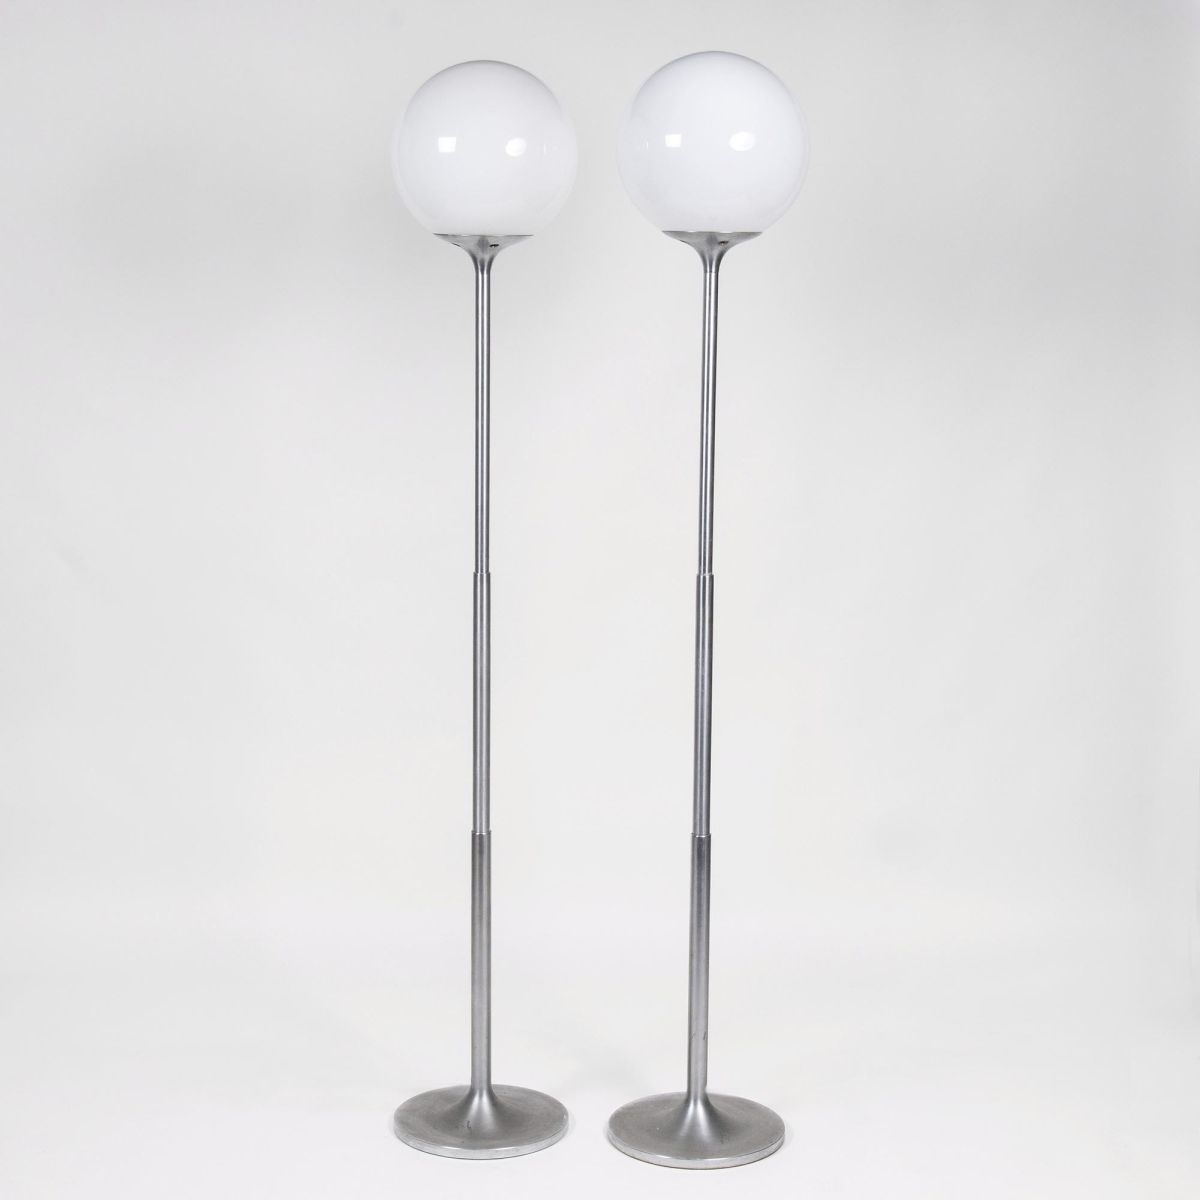 A Pair of Vintage 'Polluce' Floor Lamps for Artemide